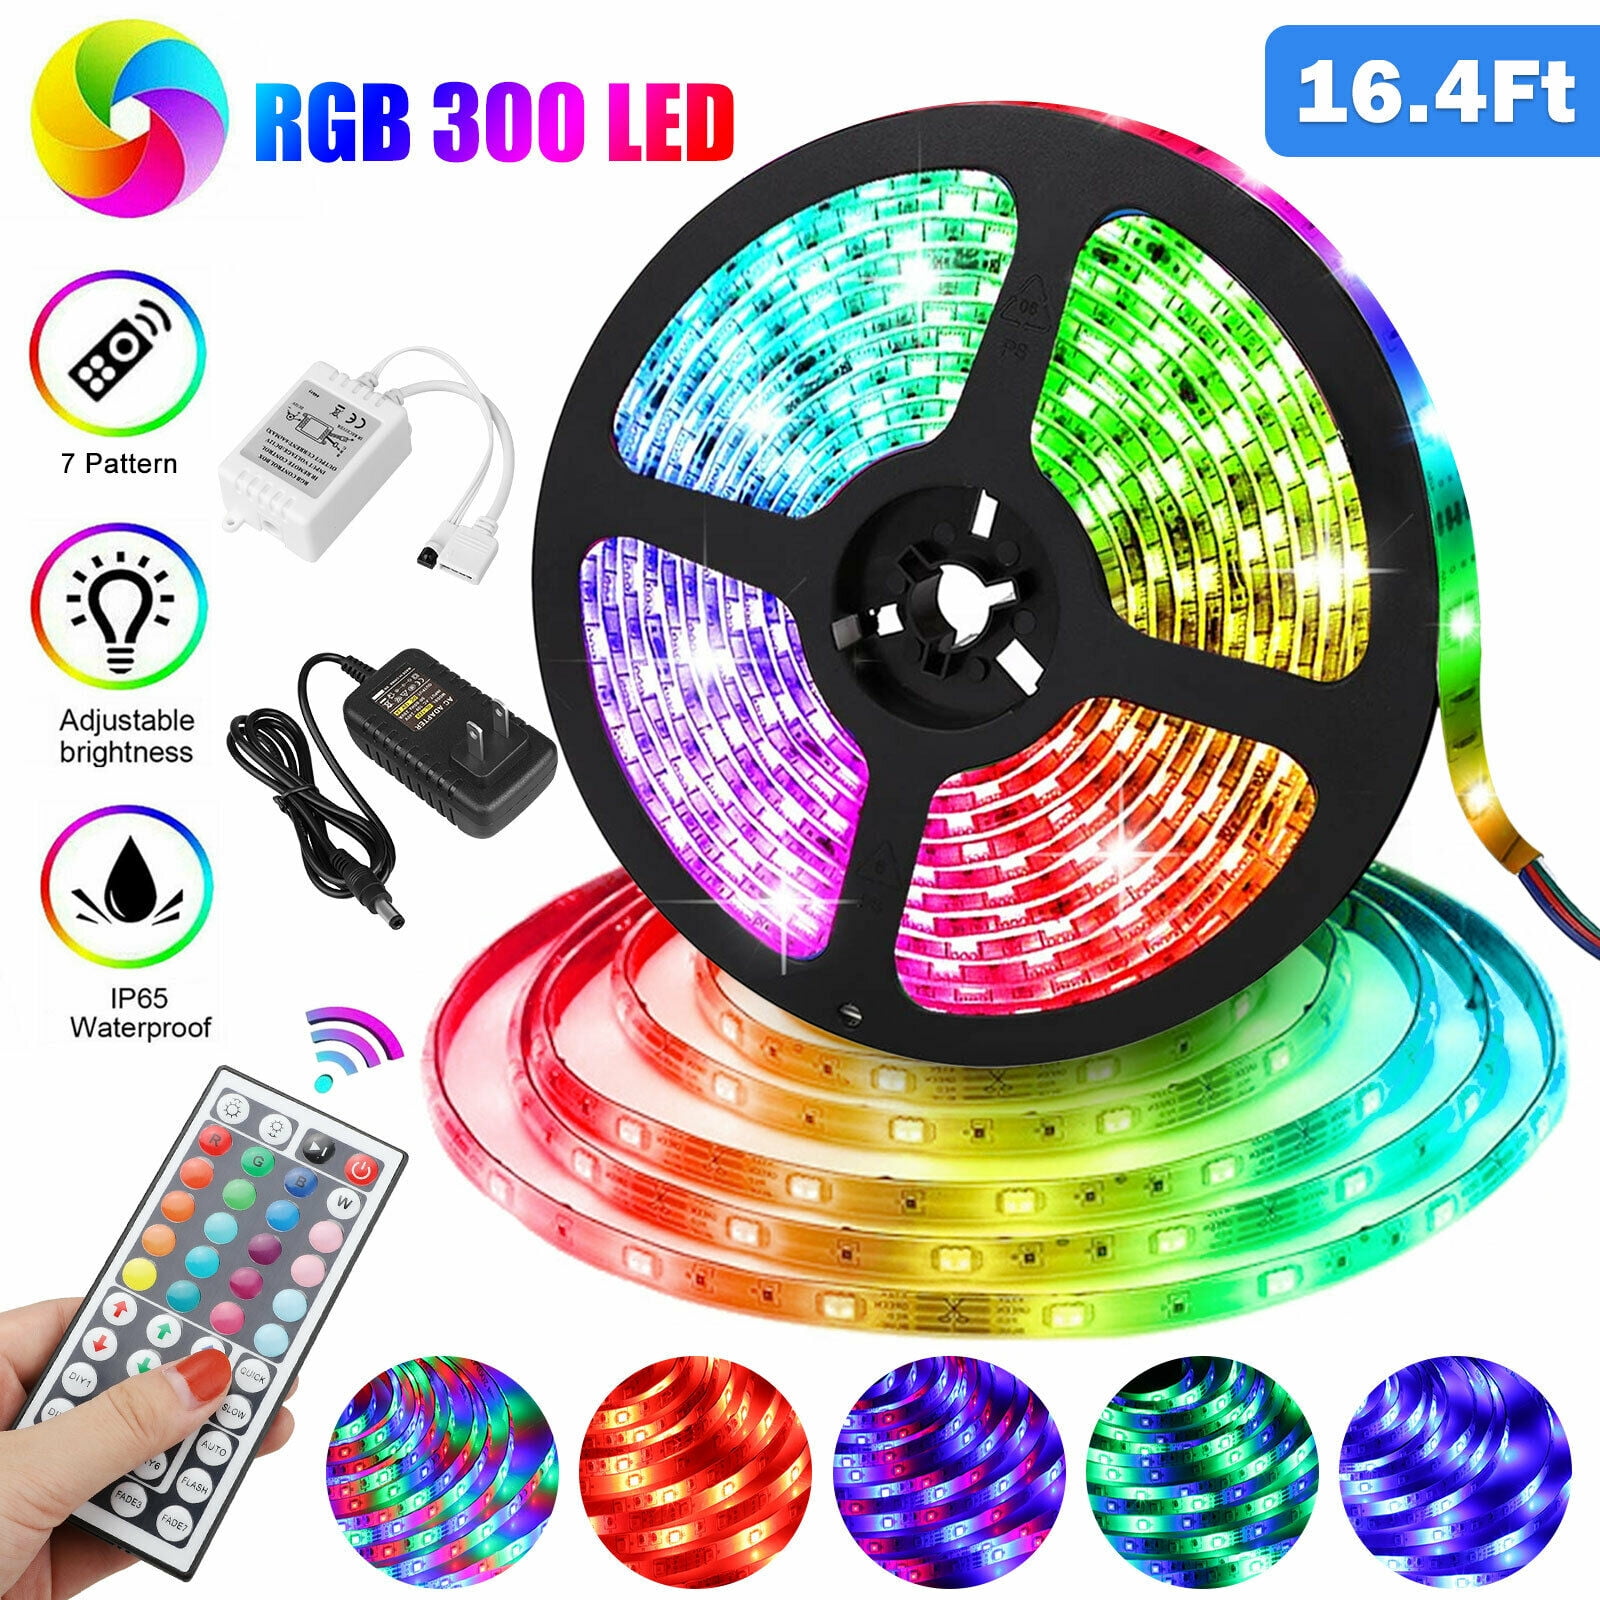 Led Strip Lights 32.8ft 10m Flexible Multi Color RGB 5050/3528 600leds Tape 12V